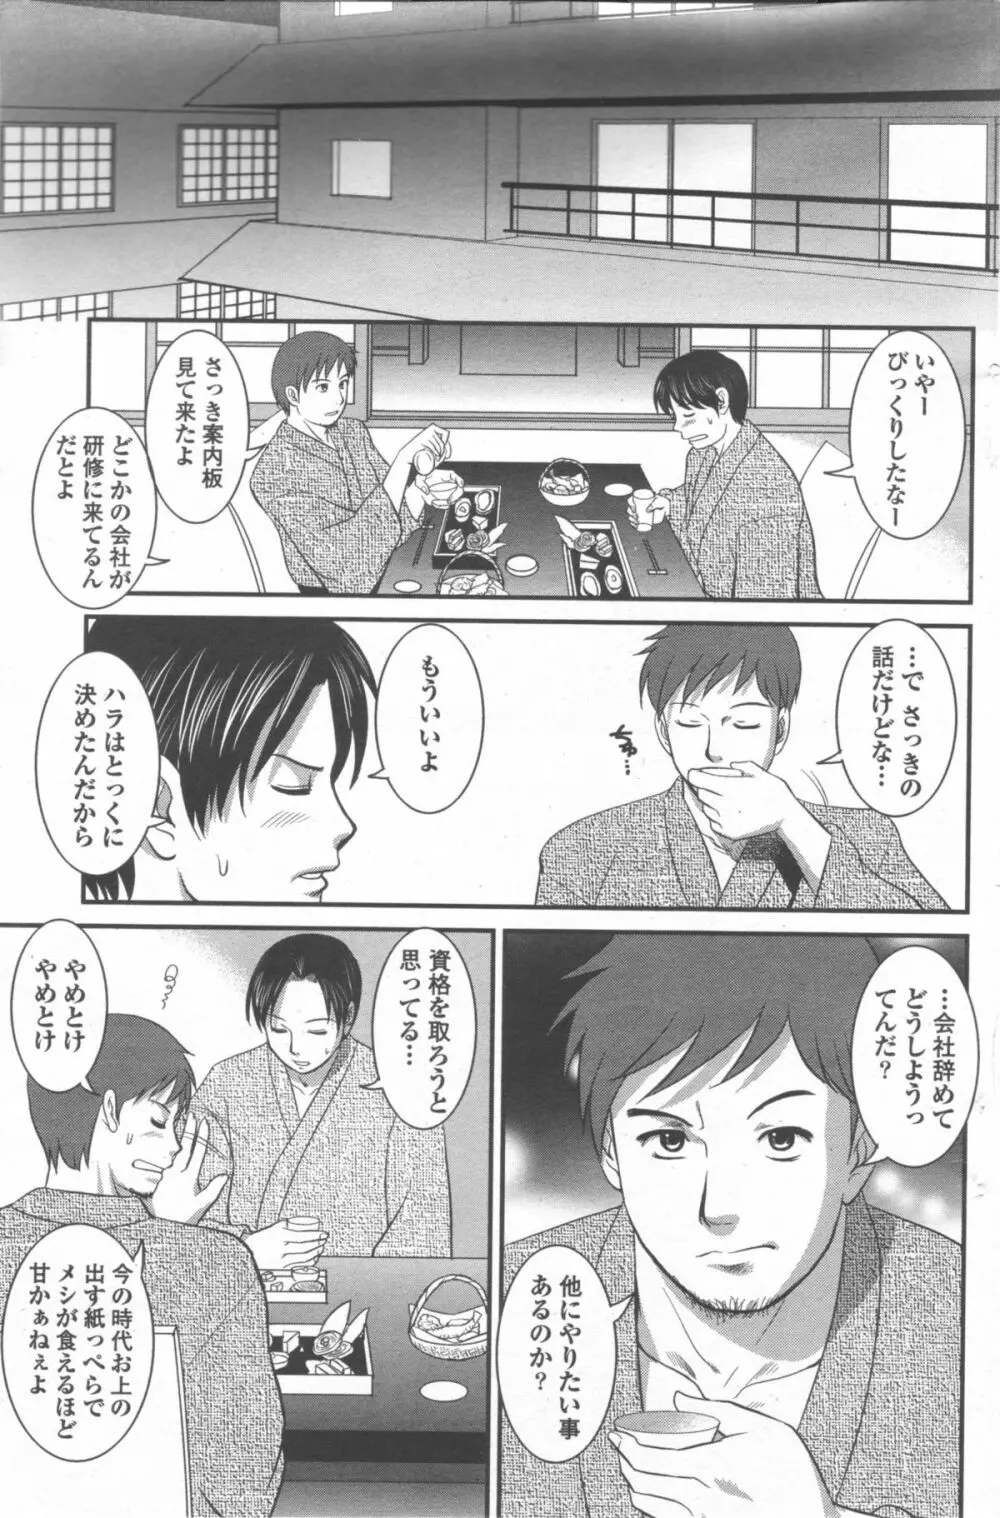 Haken no Muuko-san 9 6ページ